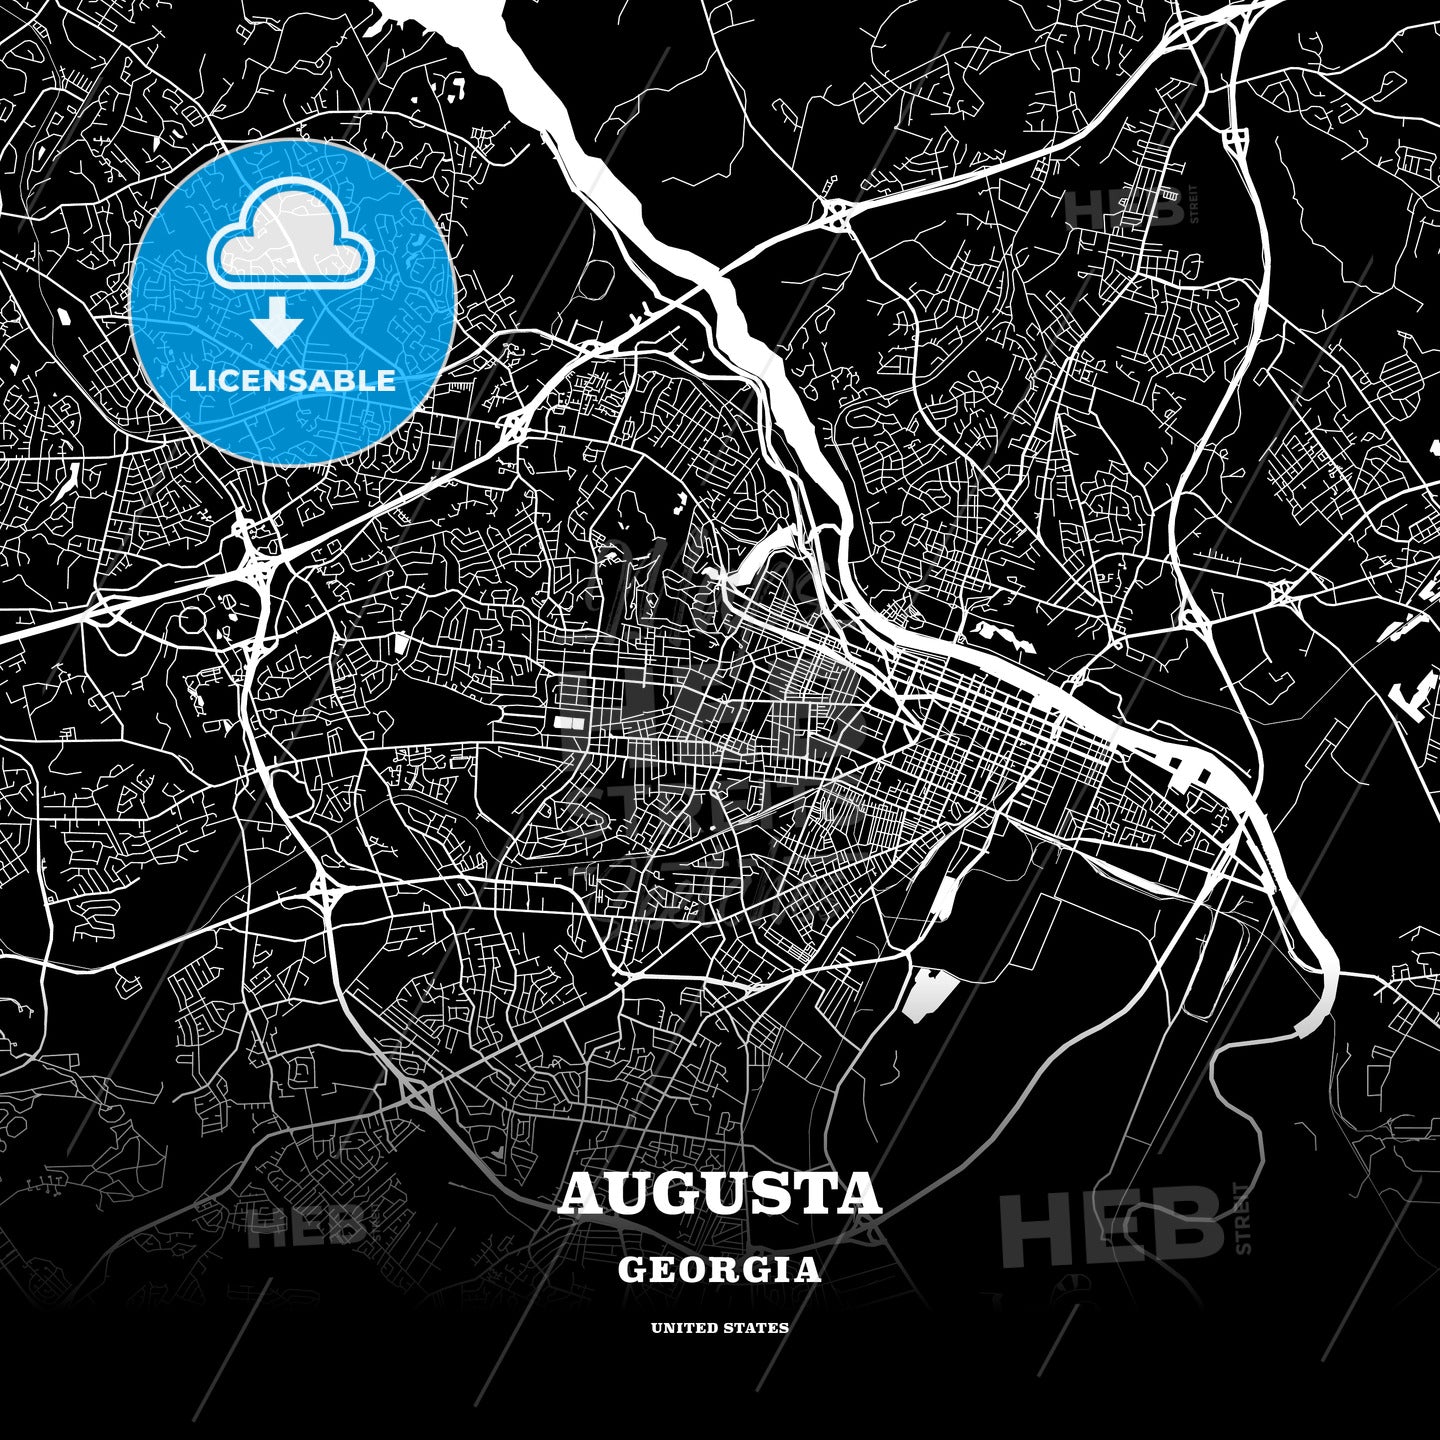 Augusta, Georgia, USA map